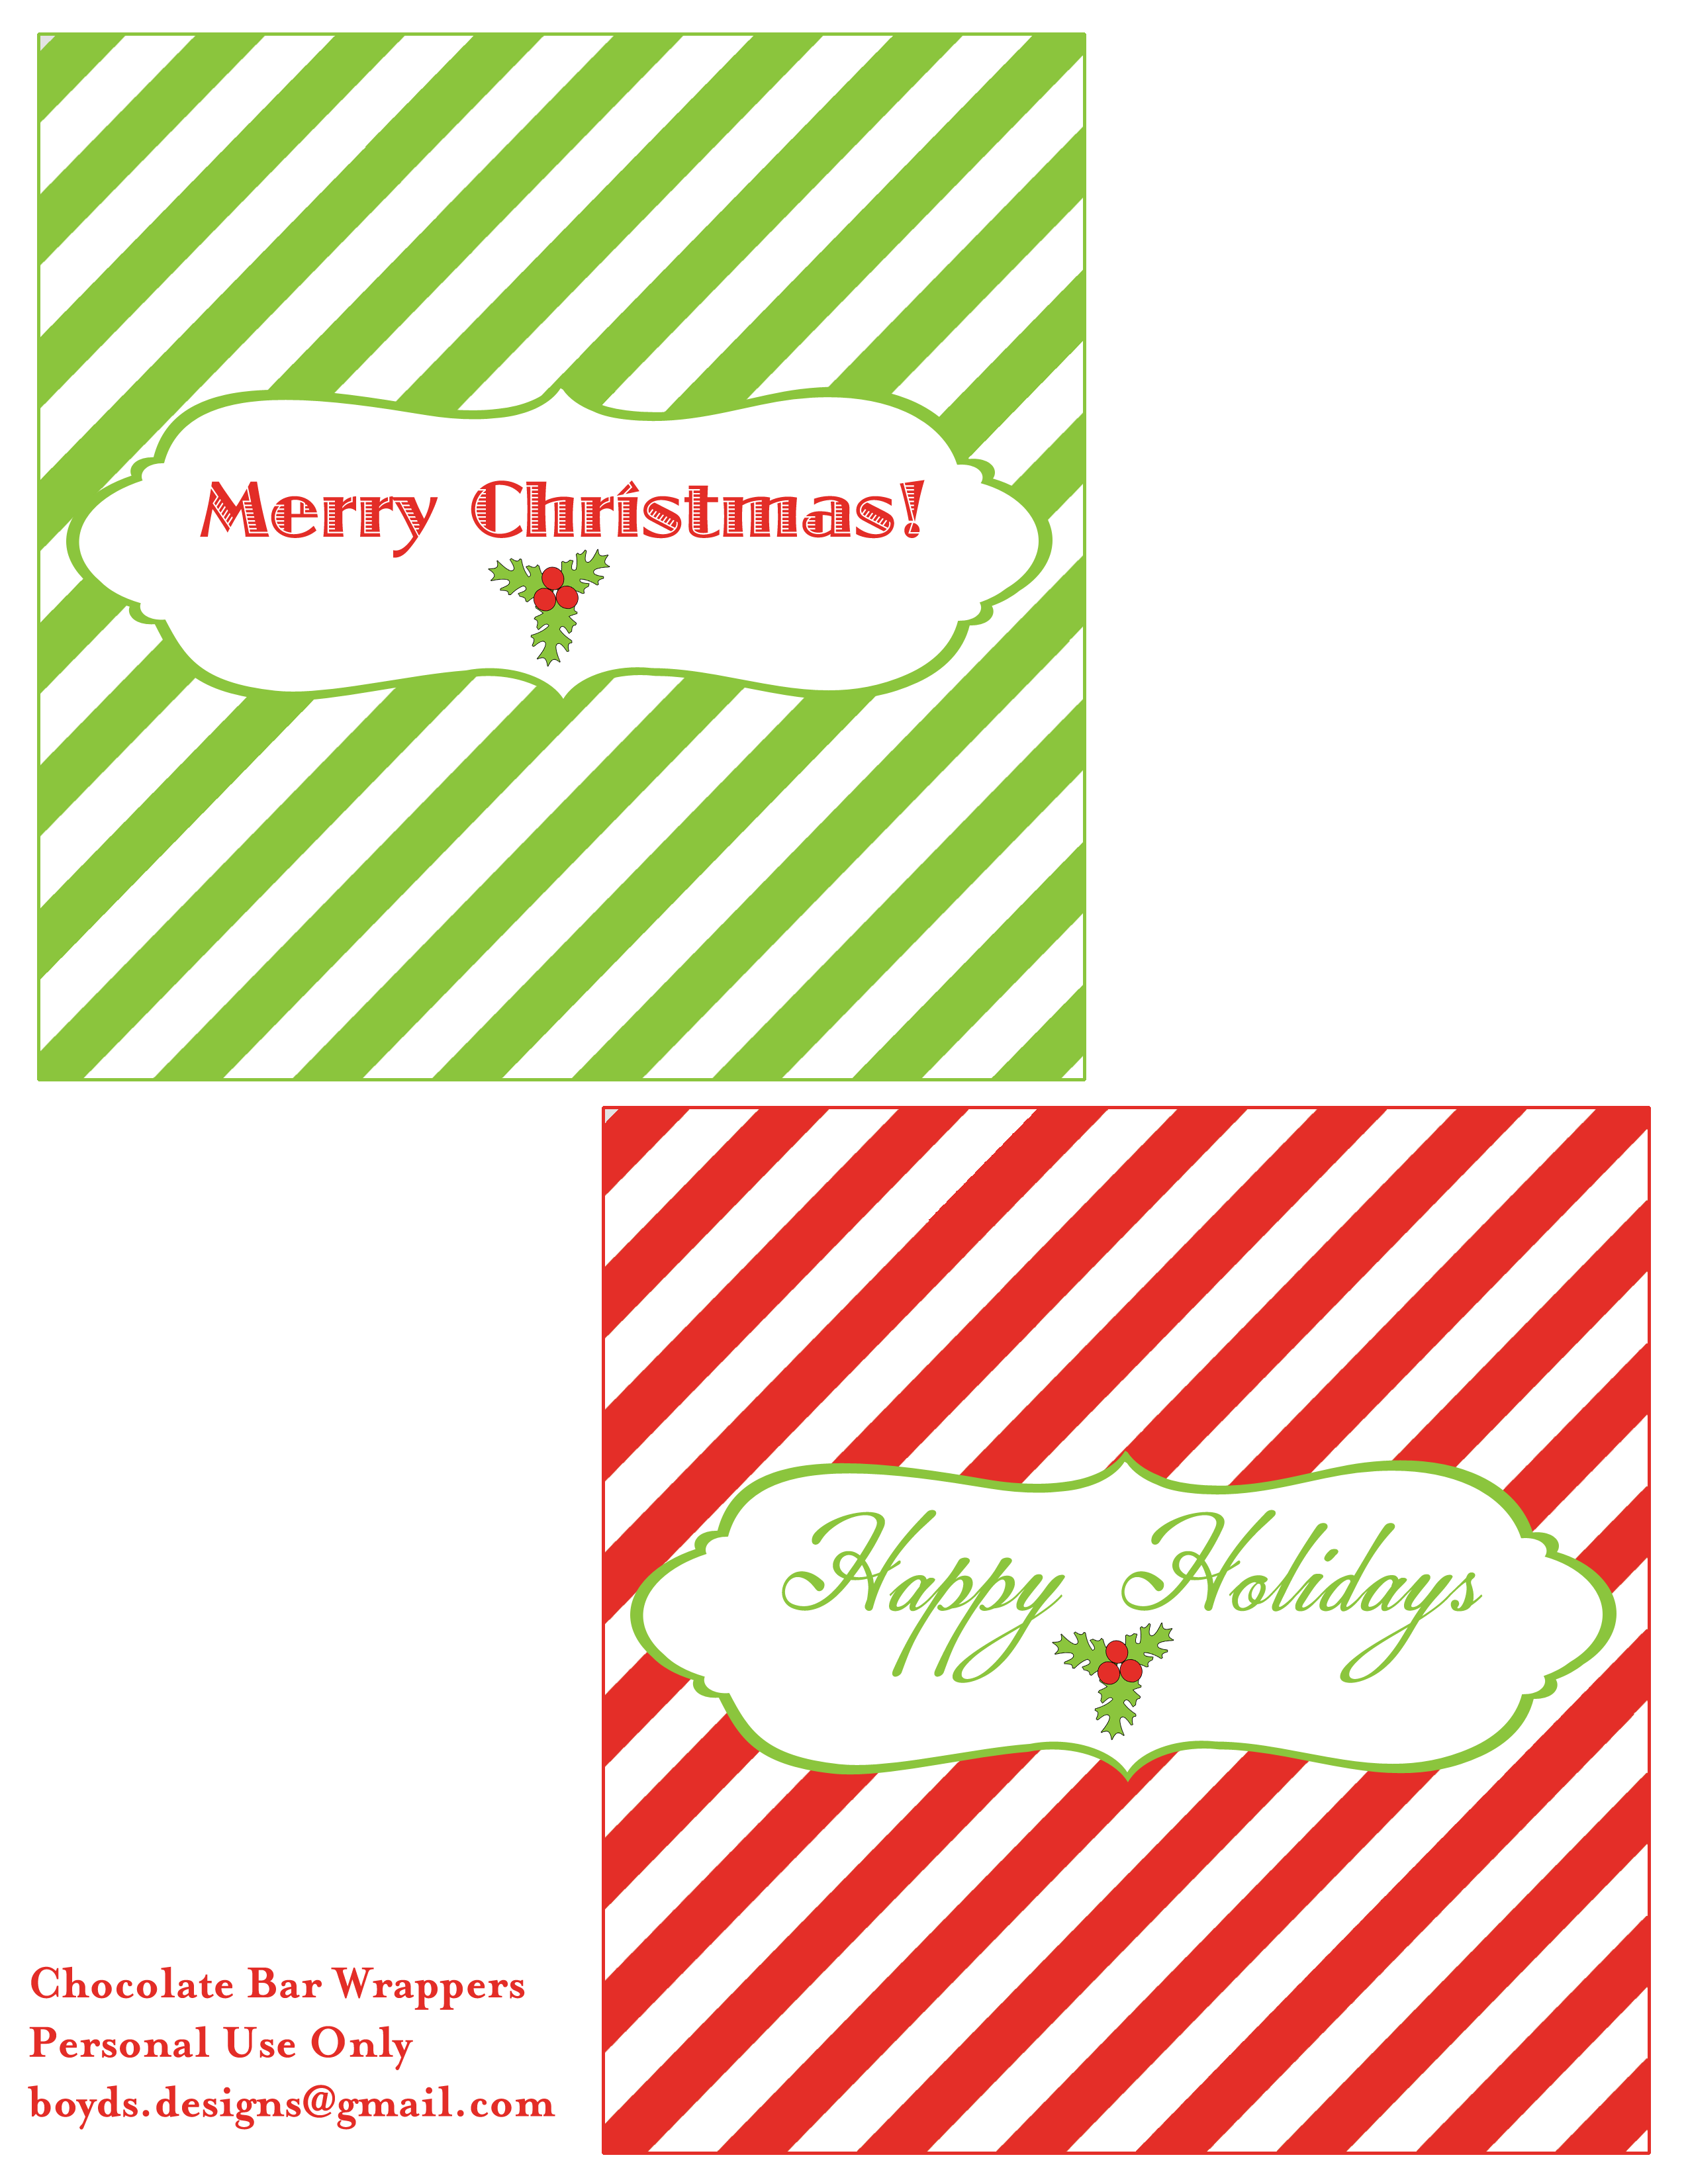 12 Days Of Christmas Diy Printable Freebies Day 4 Chocolate Bar Wrappers Carla Baxter Hunter